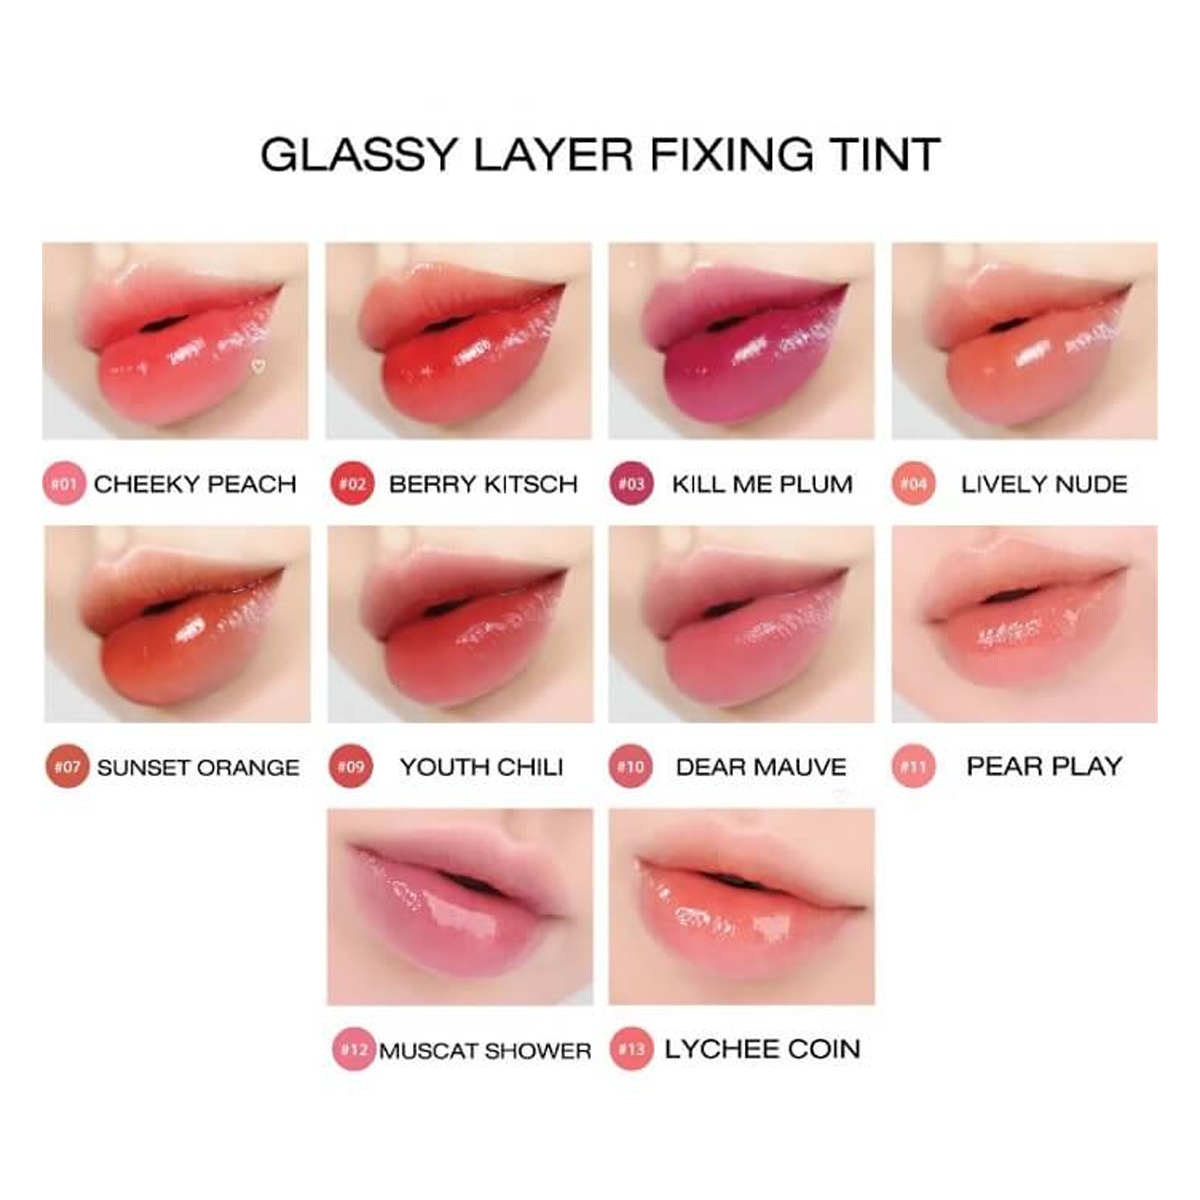 lilybyred - Glassy Layer Fixing Tint - Korean Cosmetic - glass-like finish on lips - Lipstick - Korean Lips tint Gloss - Hyaluronic Lipgloss Makeup